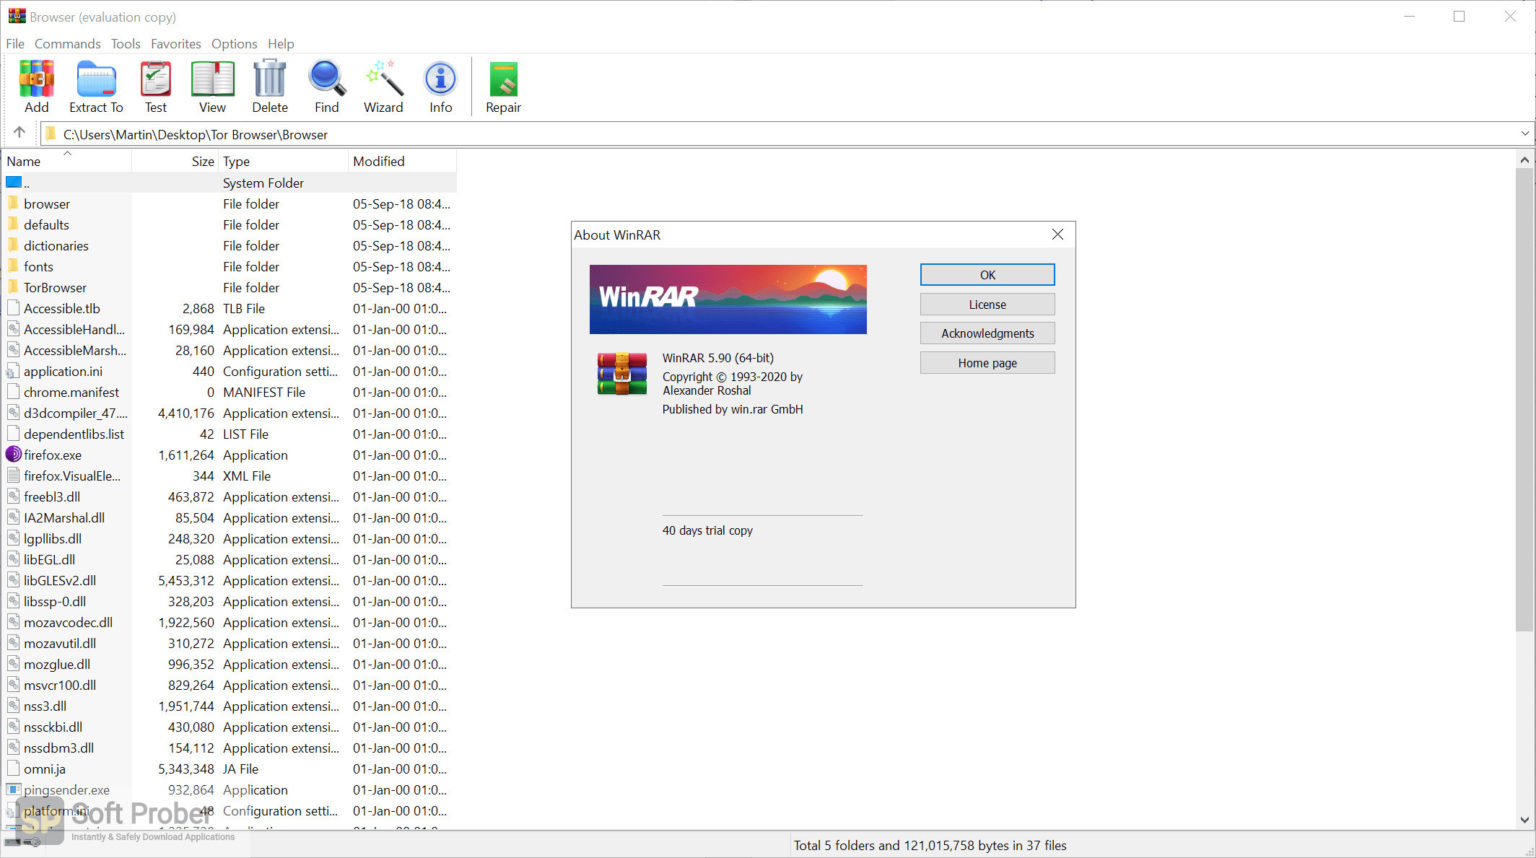 winrar for pc windows 7 32 bit free download